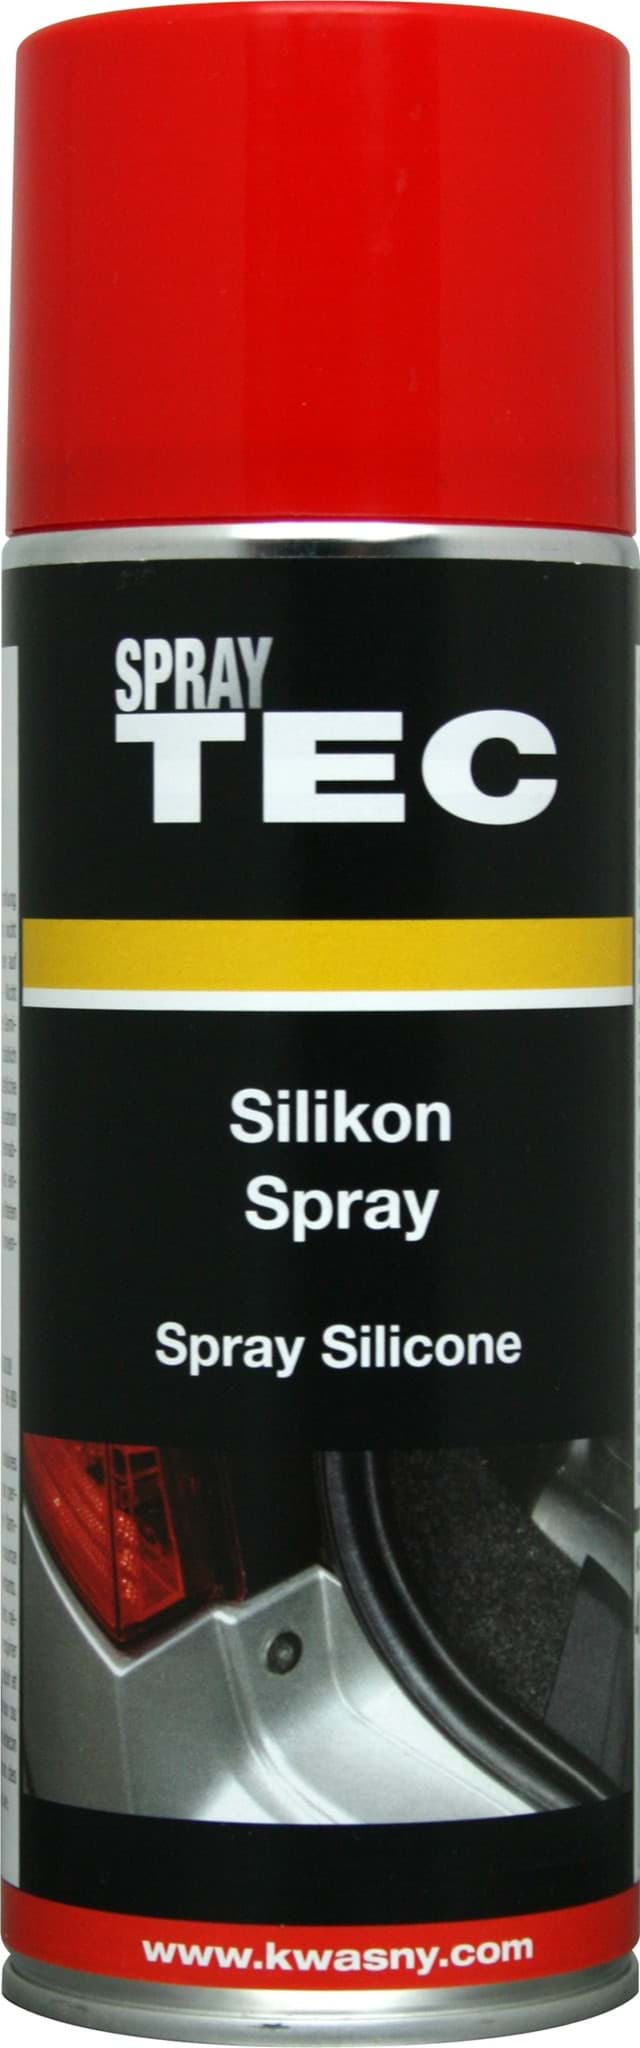 Picture of Silikon-Spray 400ml SprayTEC 235001